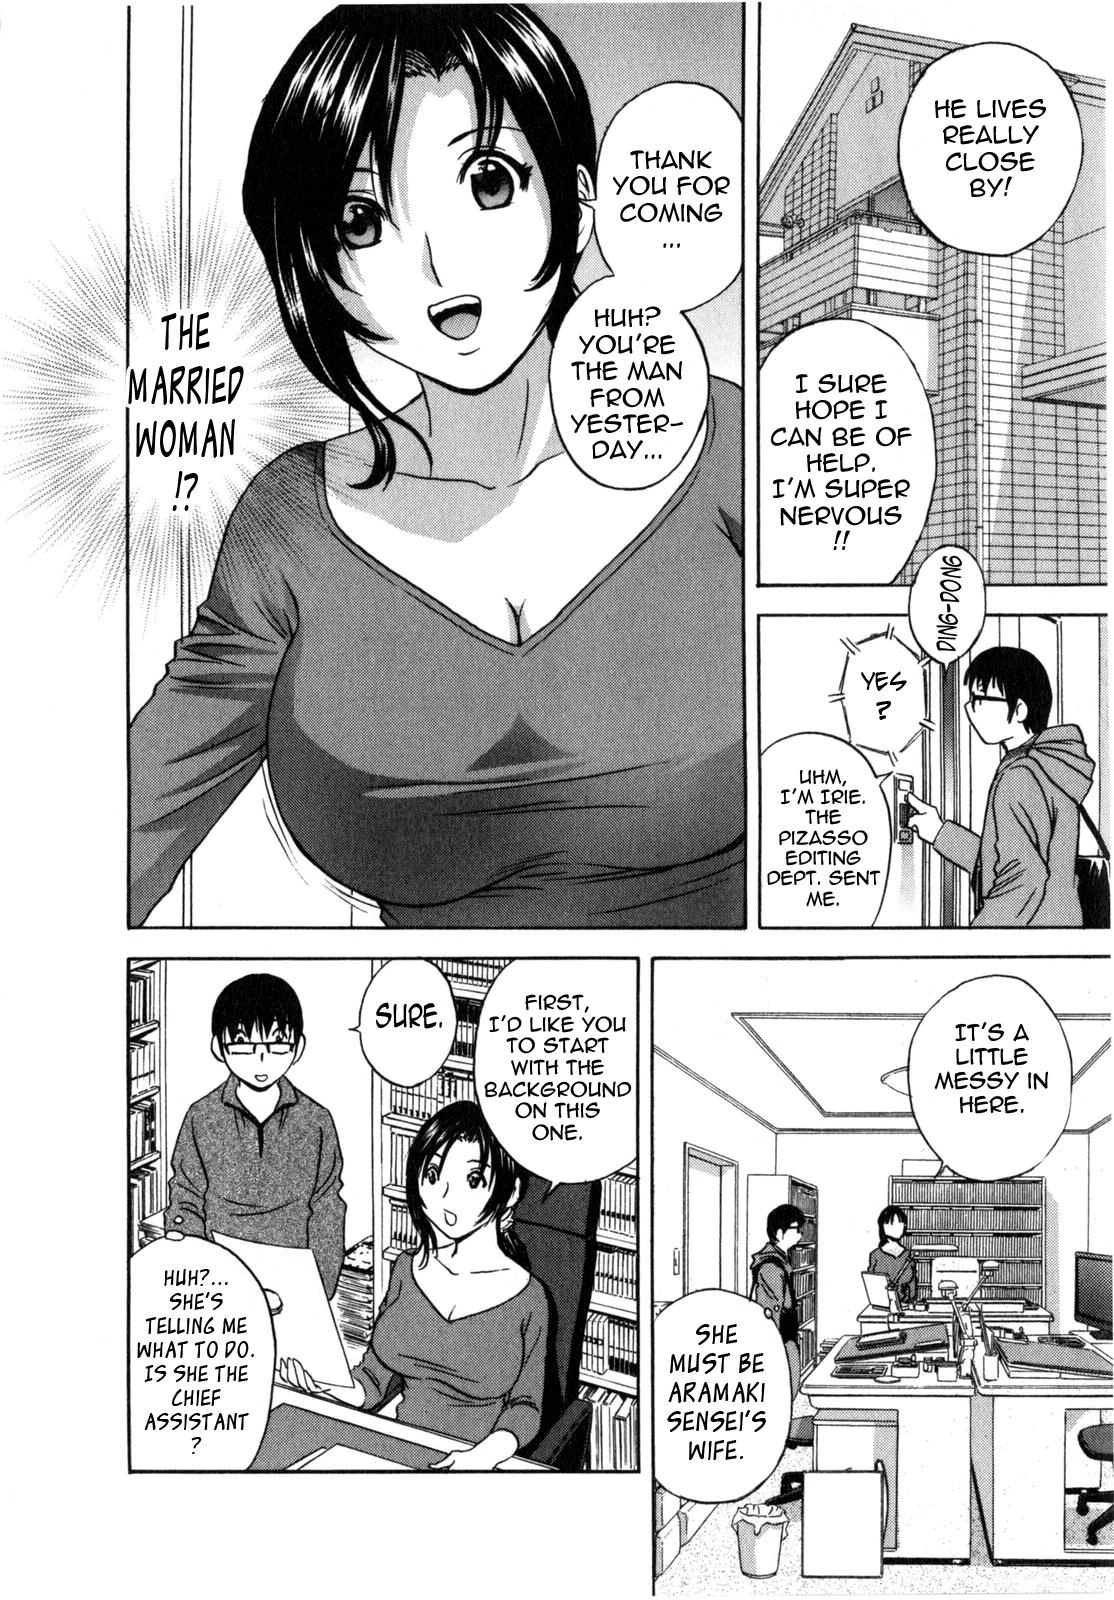 Life with Married Women Just Like a Manga 1 - Ch. 1 13